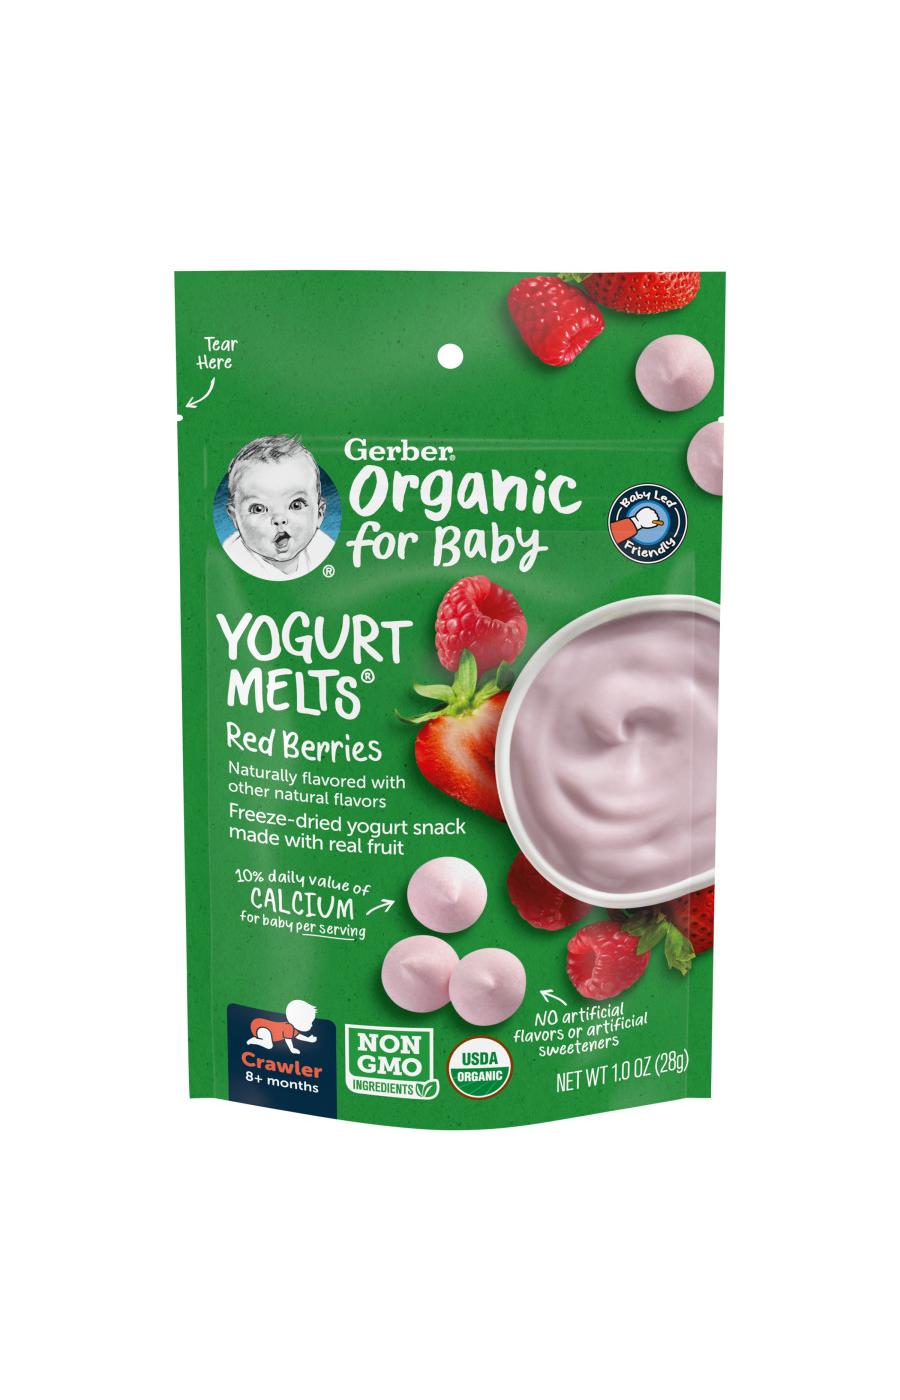 Gerber Organics for Baby Yogurt Melts - Red Berries; image 1 of 8